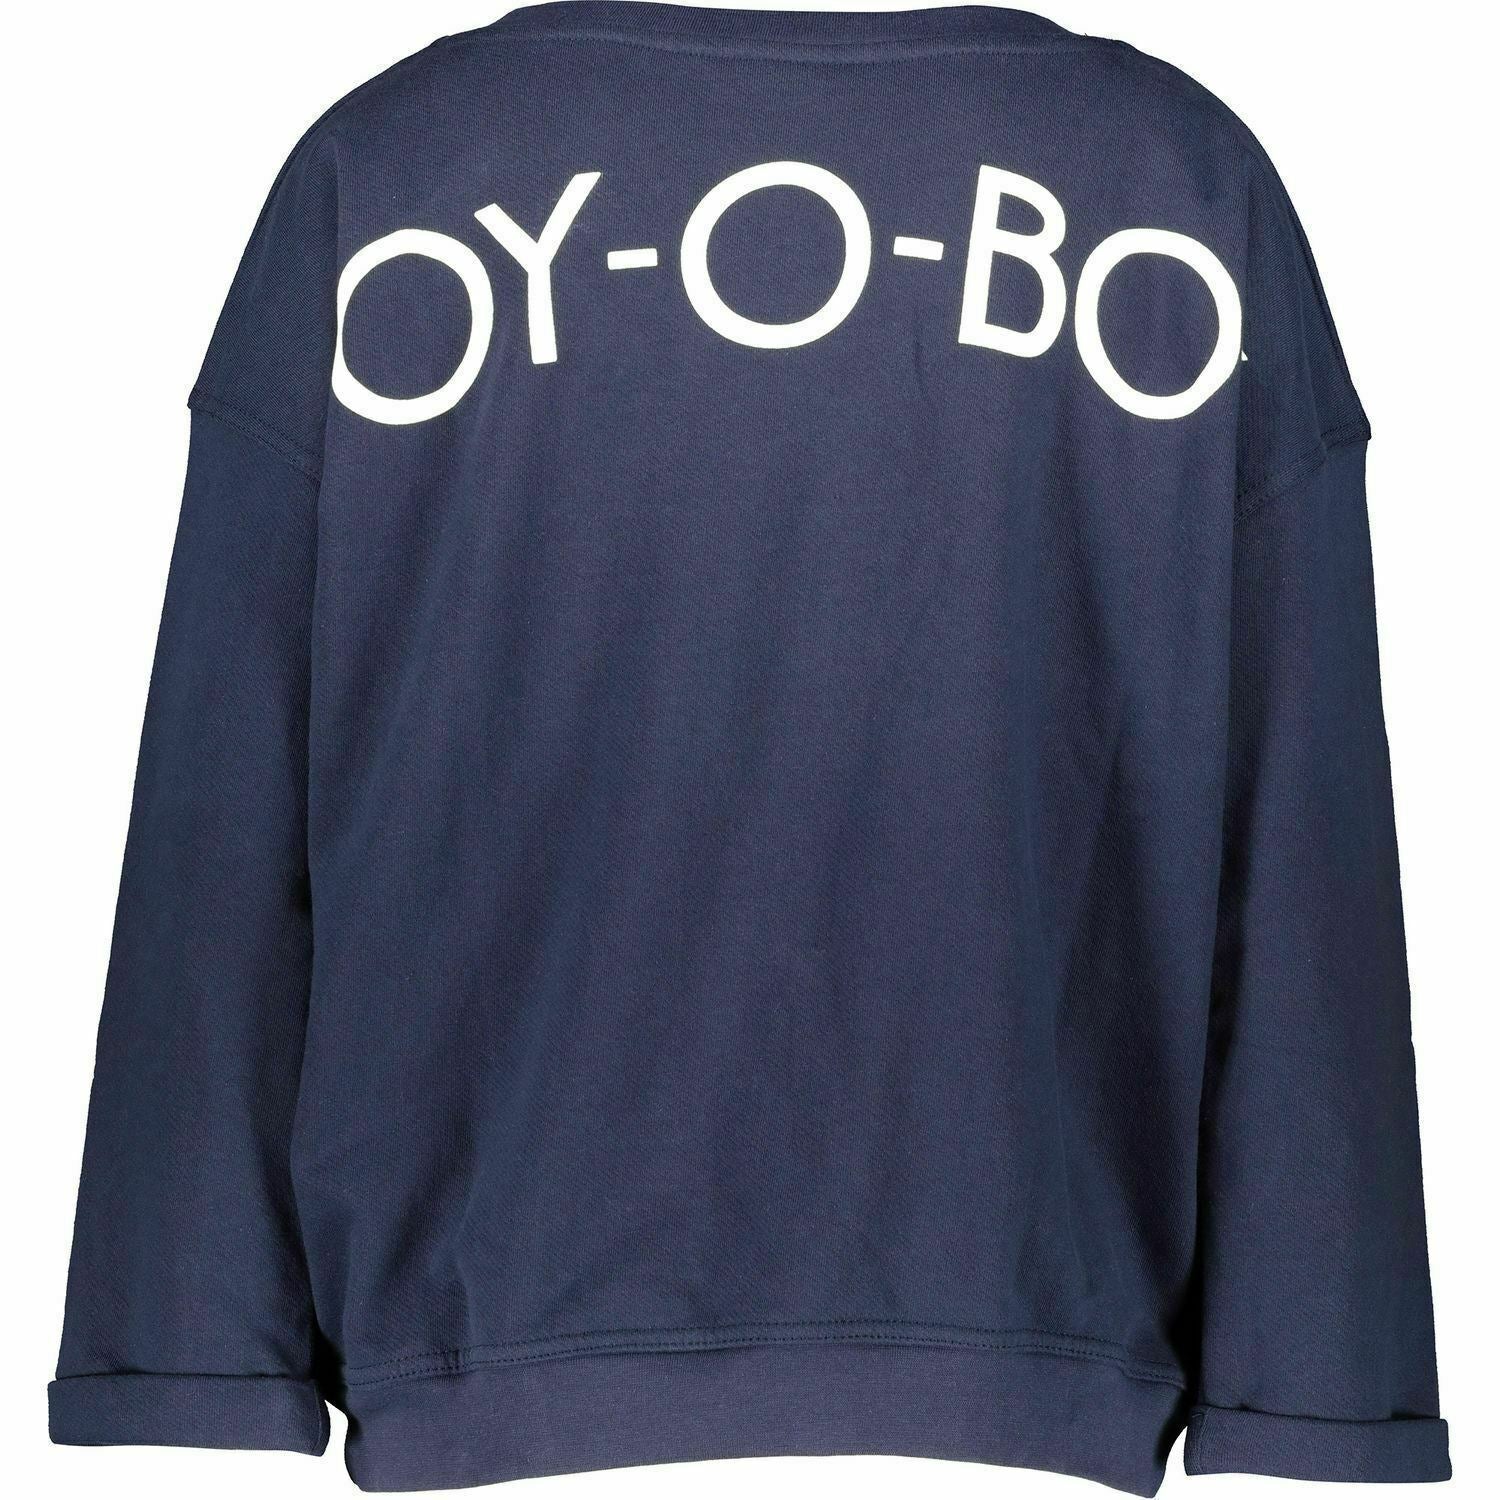 WRANGLER Womens Navy Sweatshirt Rare "Boy O Boy" size XS size S size M size L